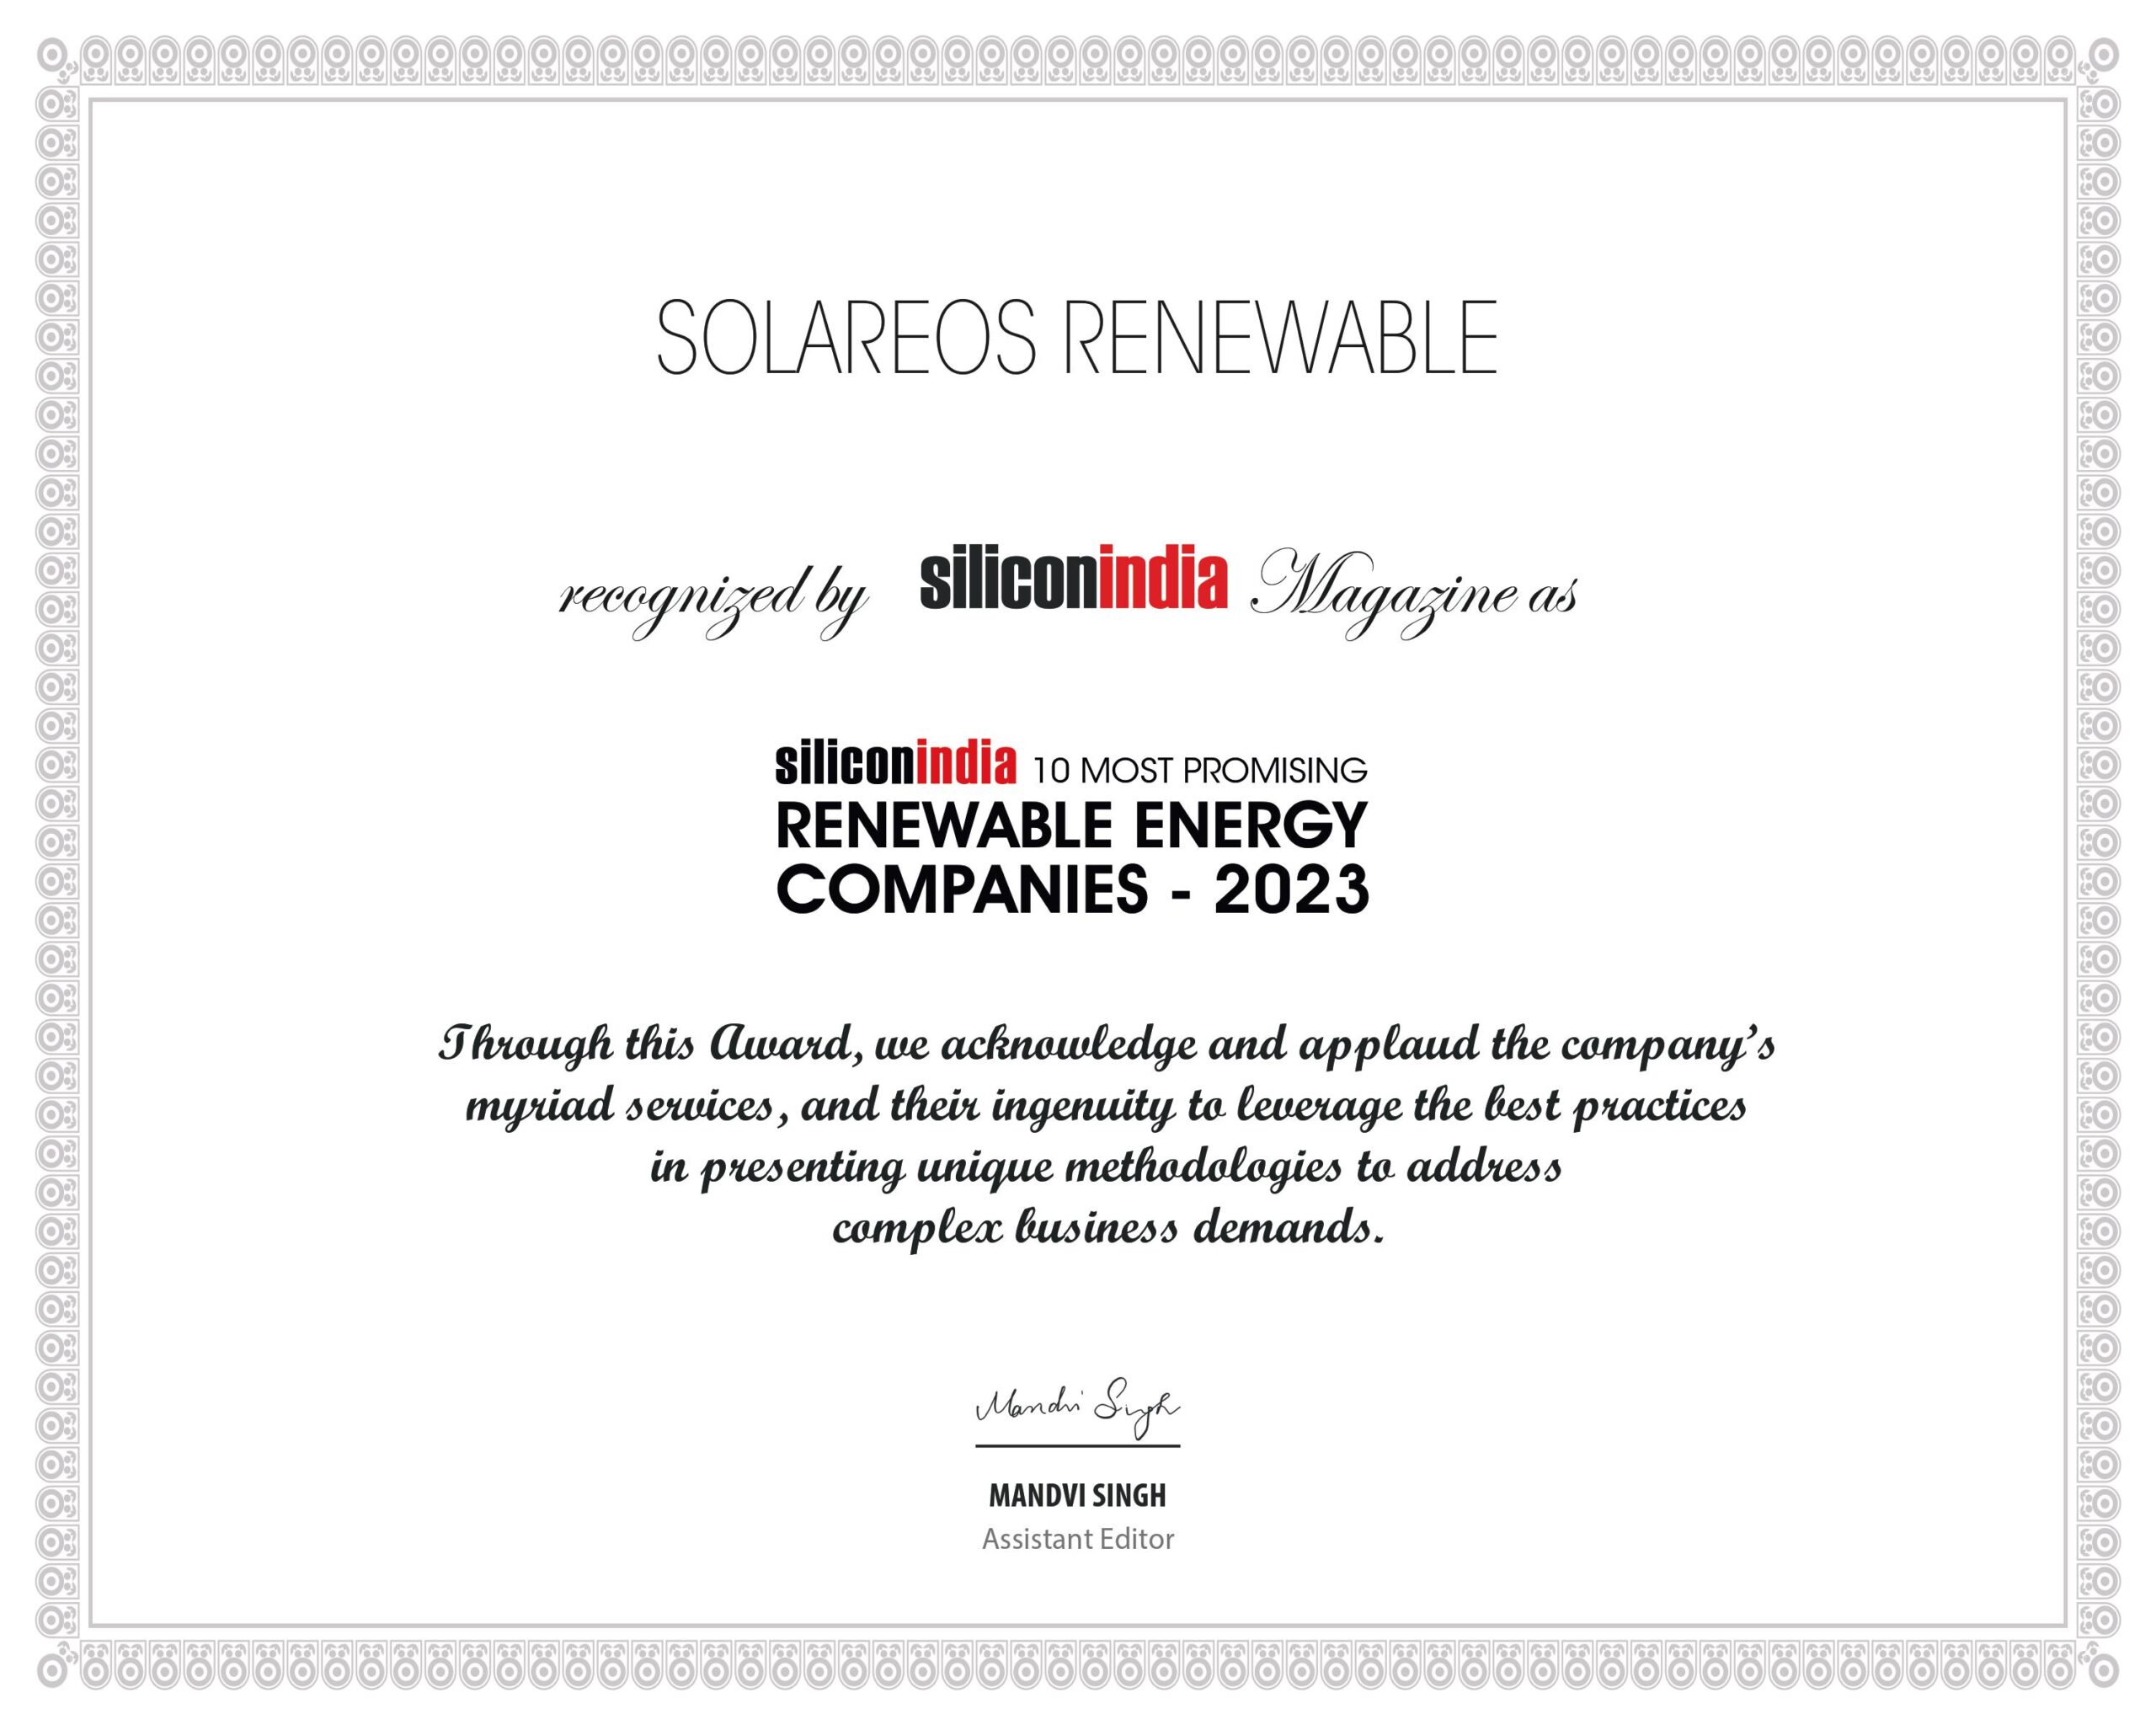 640806solareos renewable certificate640806